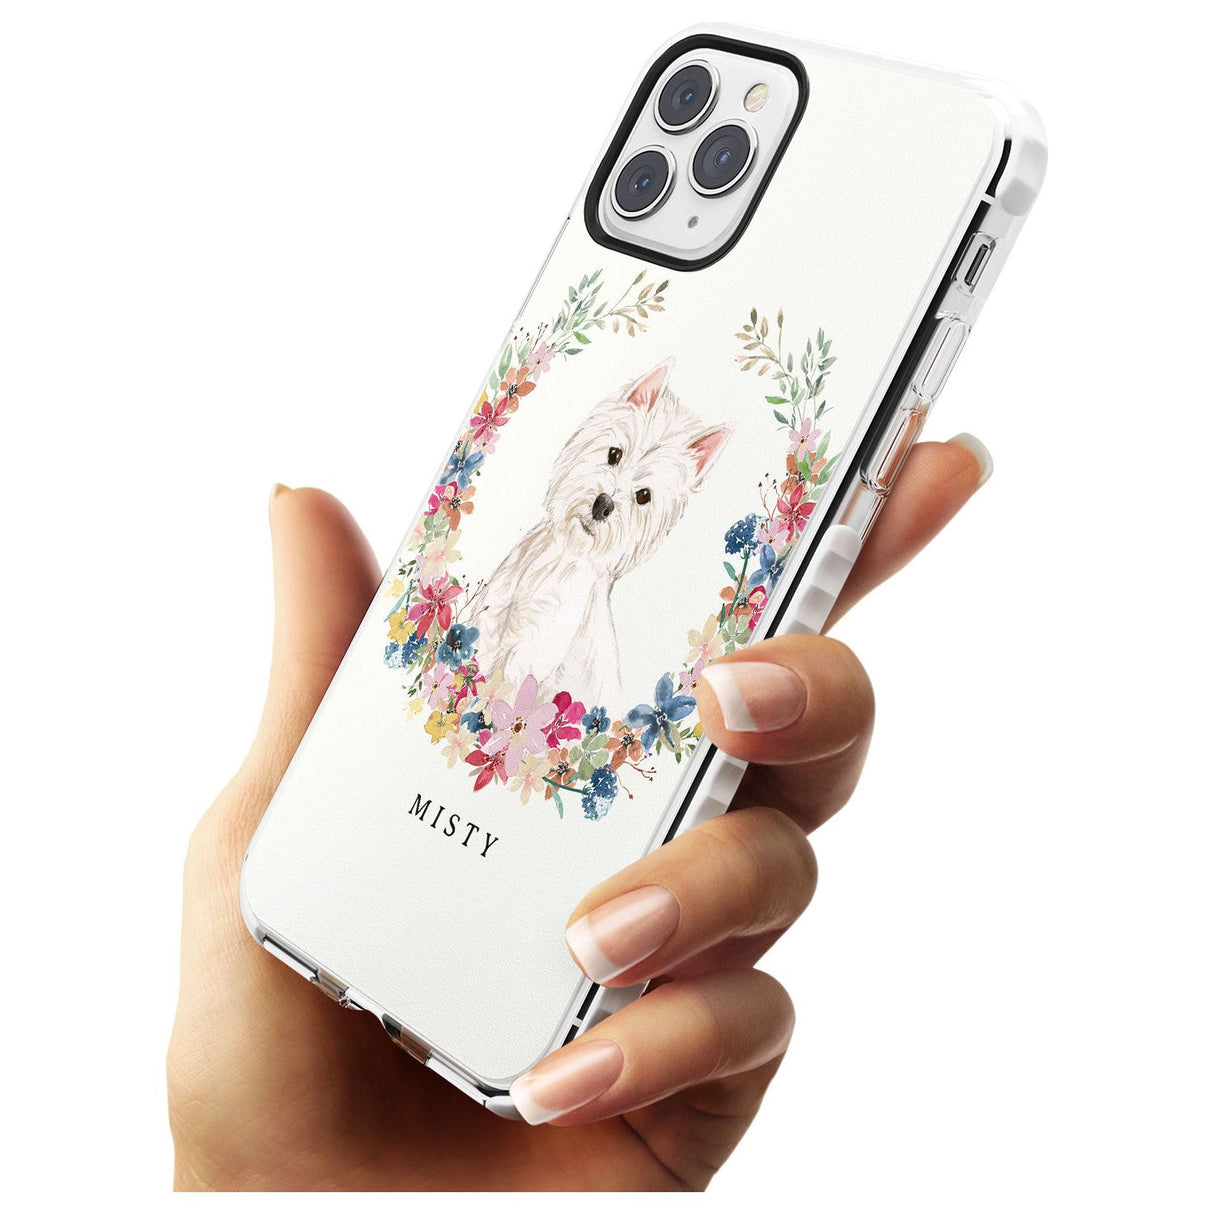 Westie Watercolour Dog Portrait Impact Phone Case for iPhone 11 Pro Max